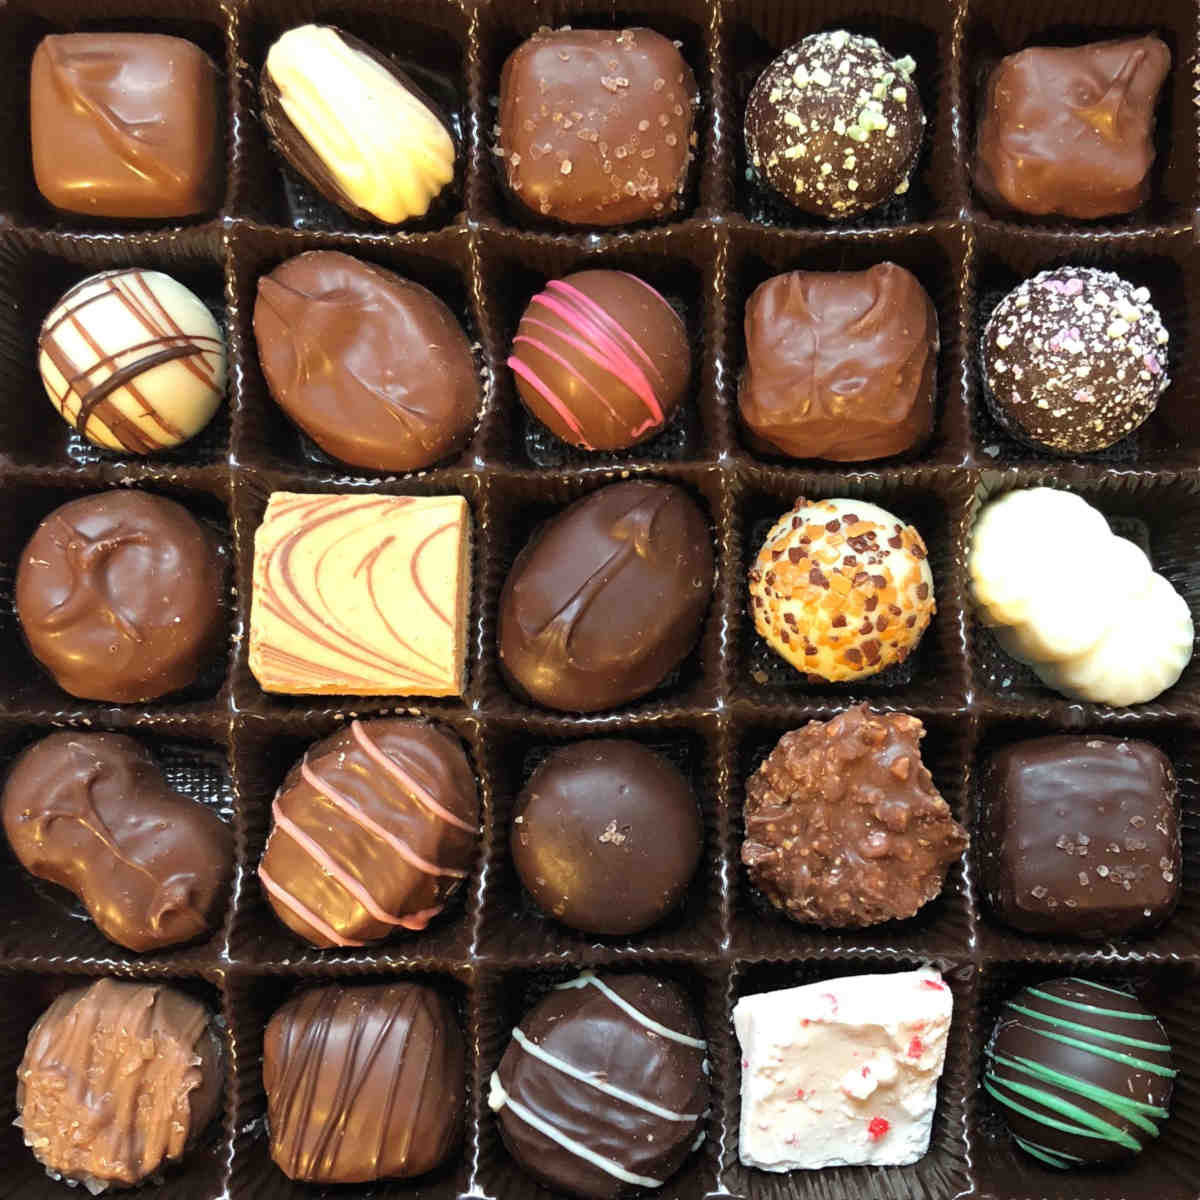 Box Of Chocolates Images